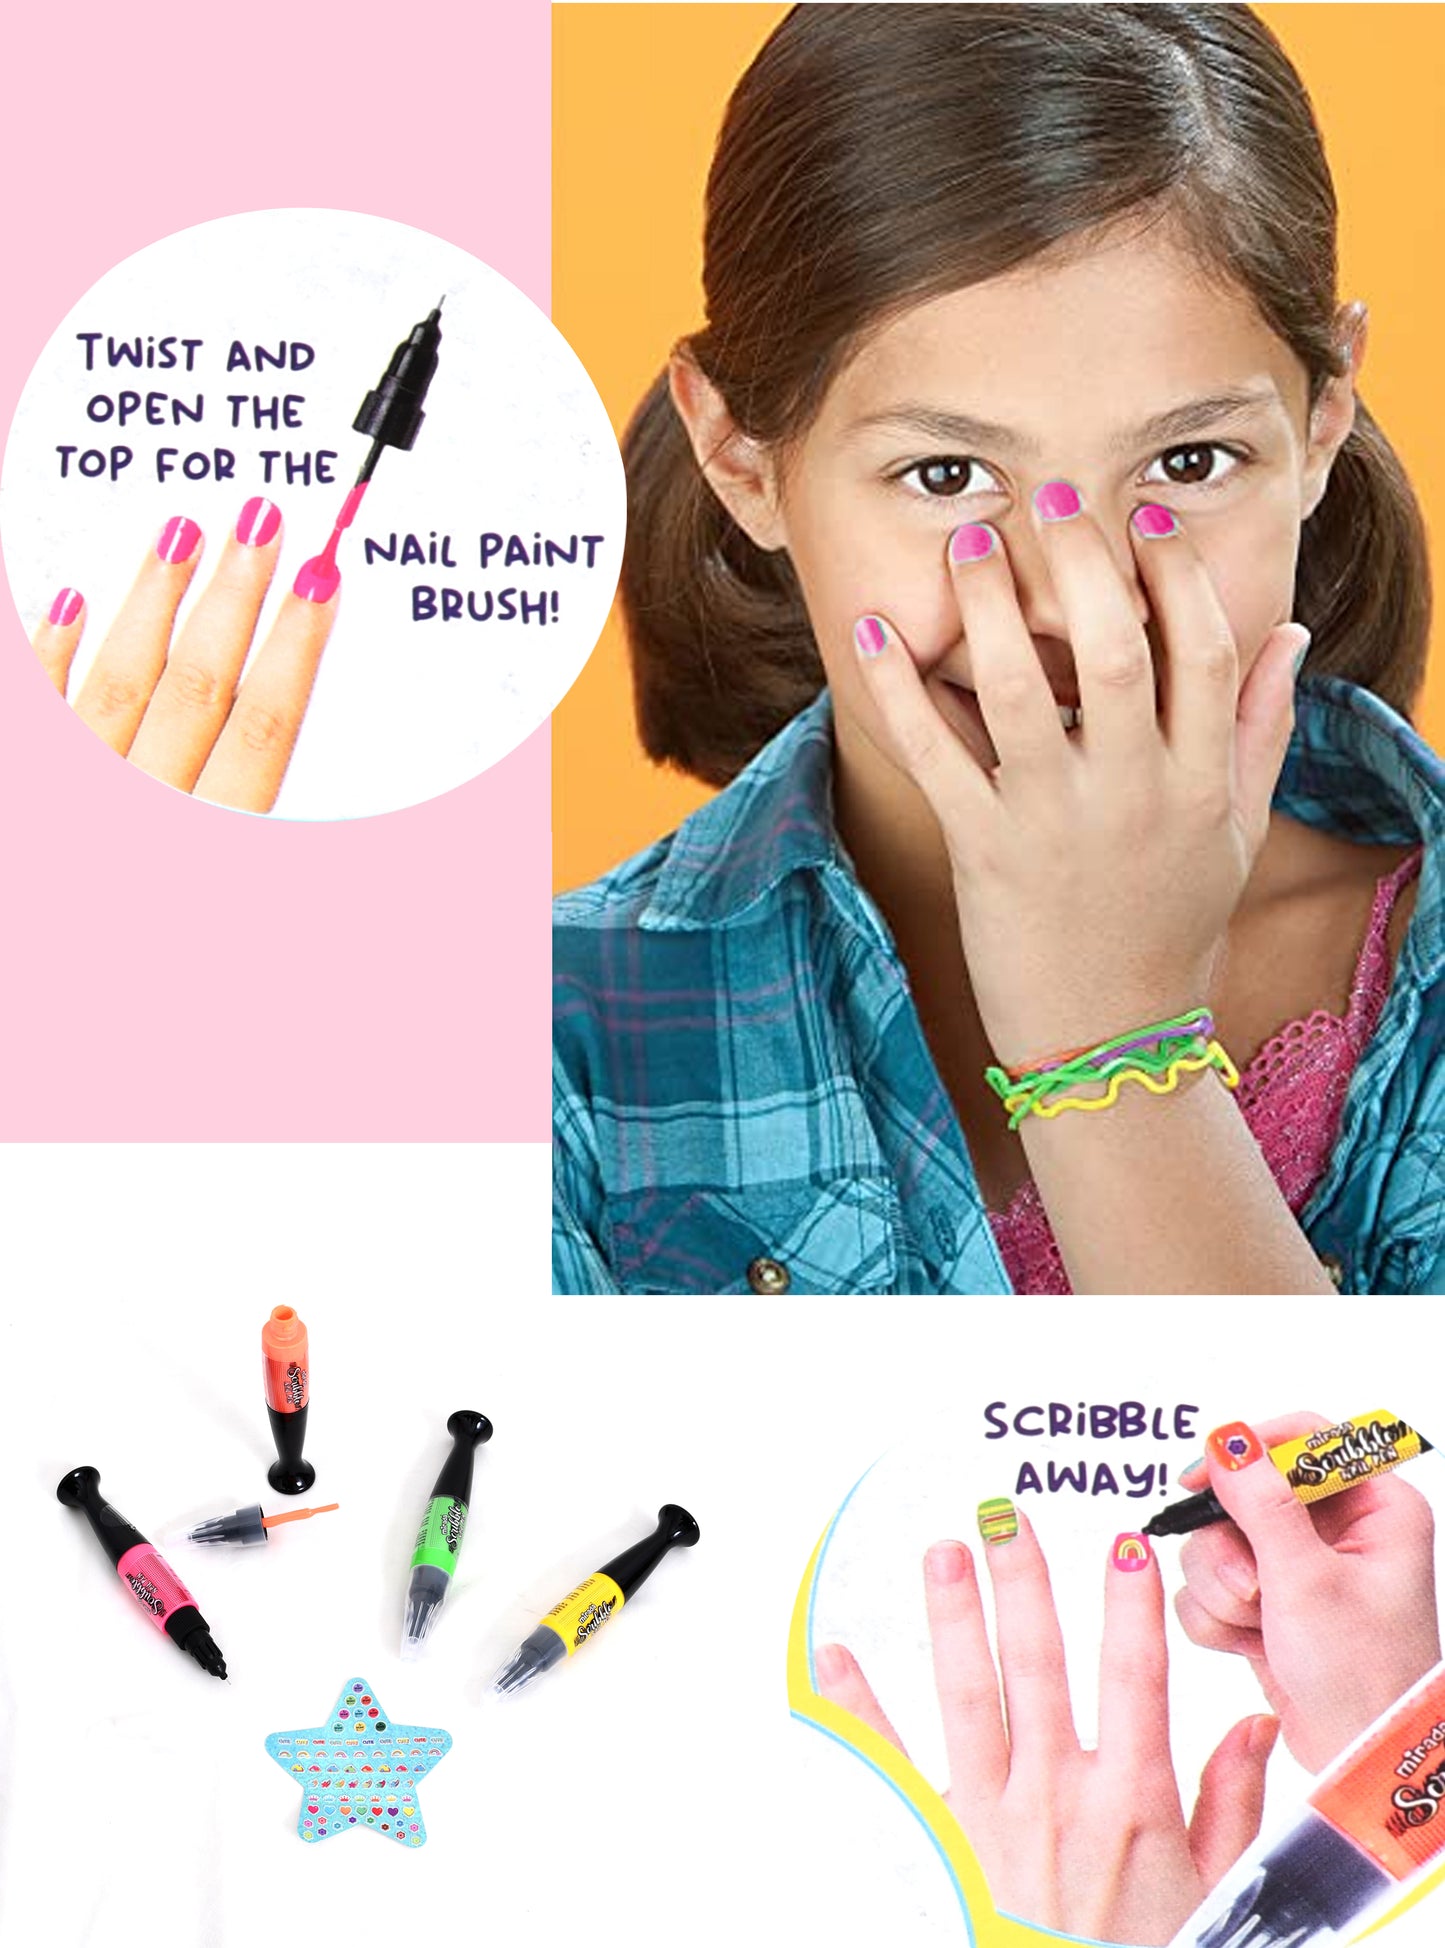 Mirada Glow in the Dark Scribble Nail Pen Nail Art Kit for Girl